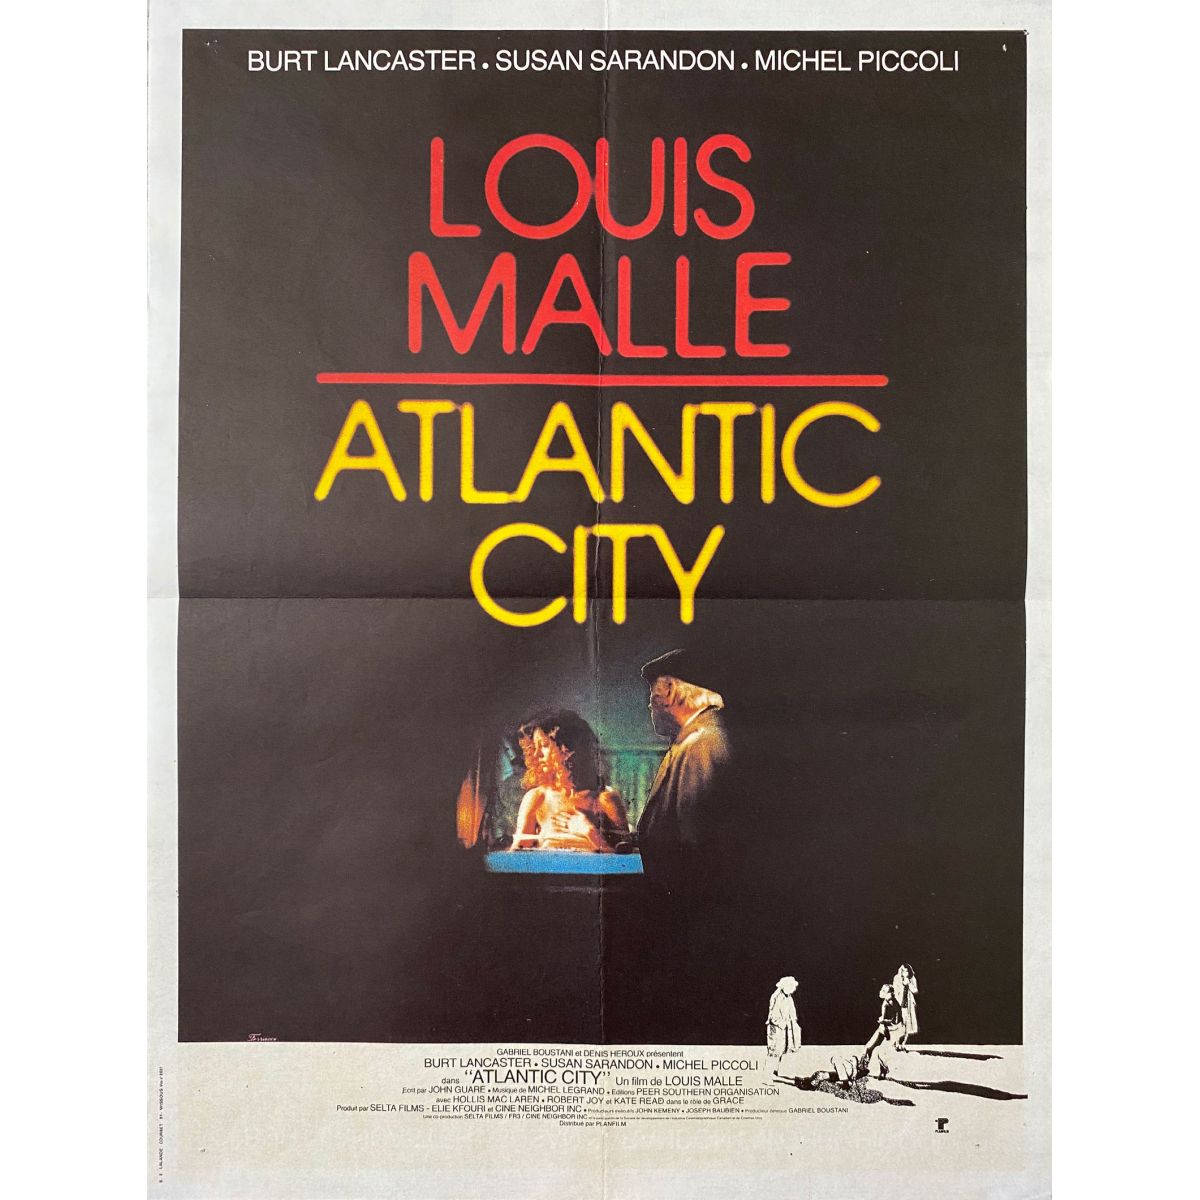 ATLANTIC CITY Movie Poster - 15x21 in. - 1980 - Louis Malle, Burt Lancaster